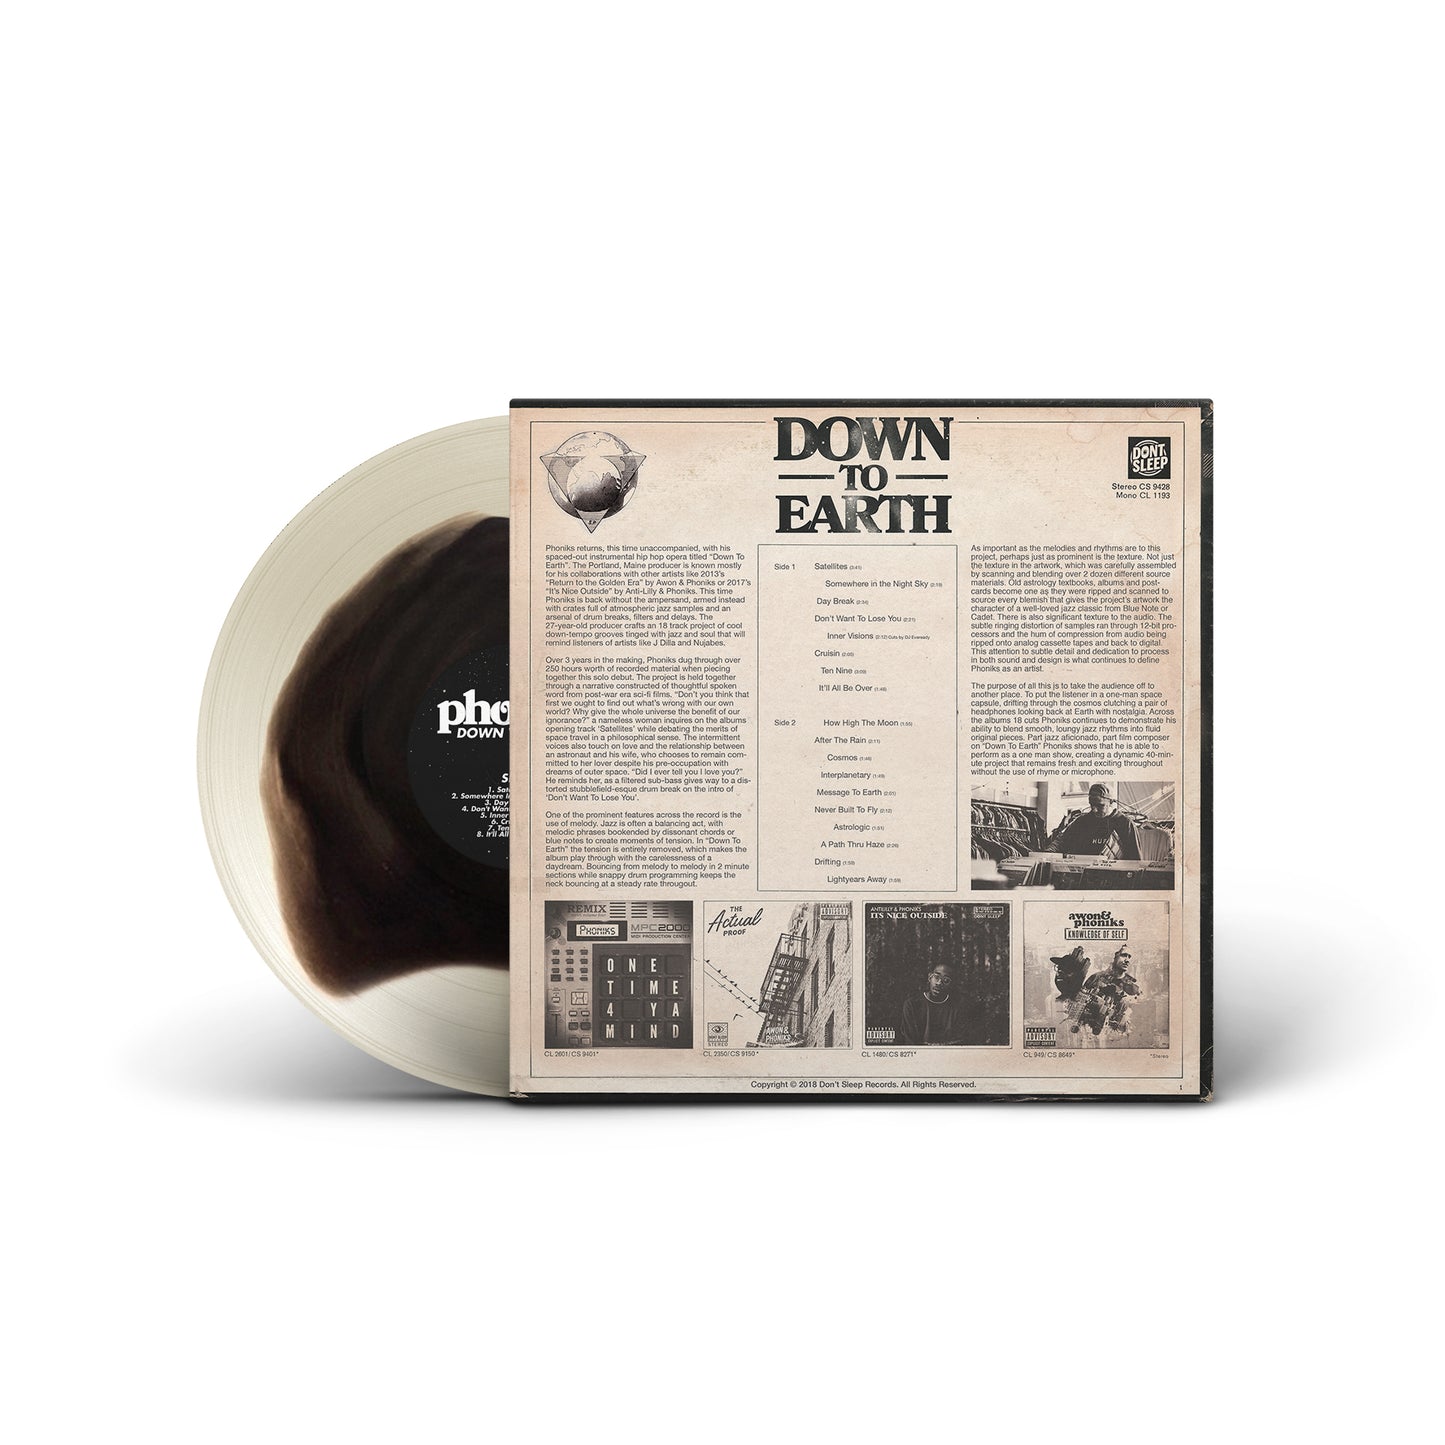 Phoniks - Down To Earth 12" Vinyl